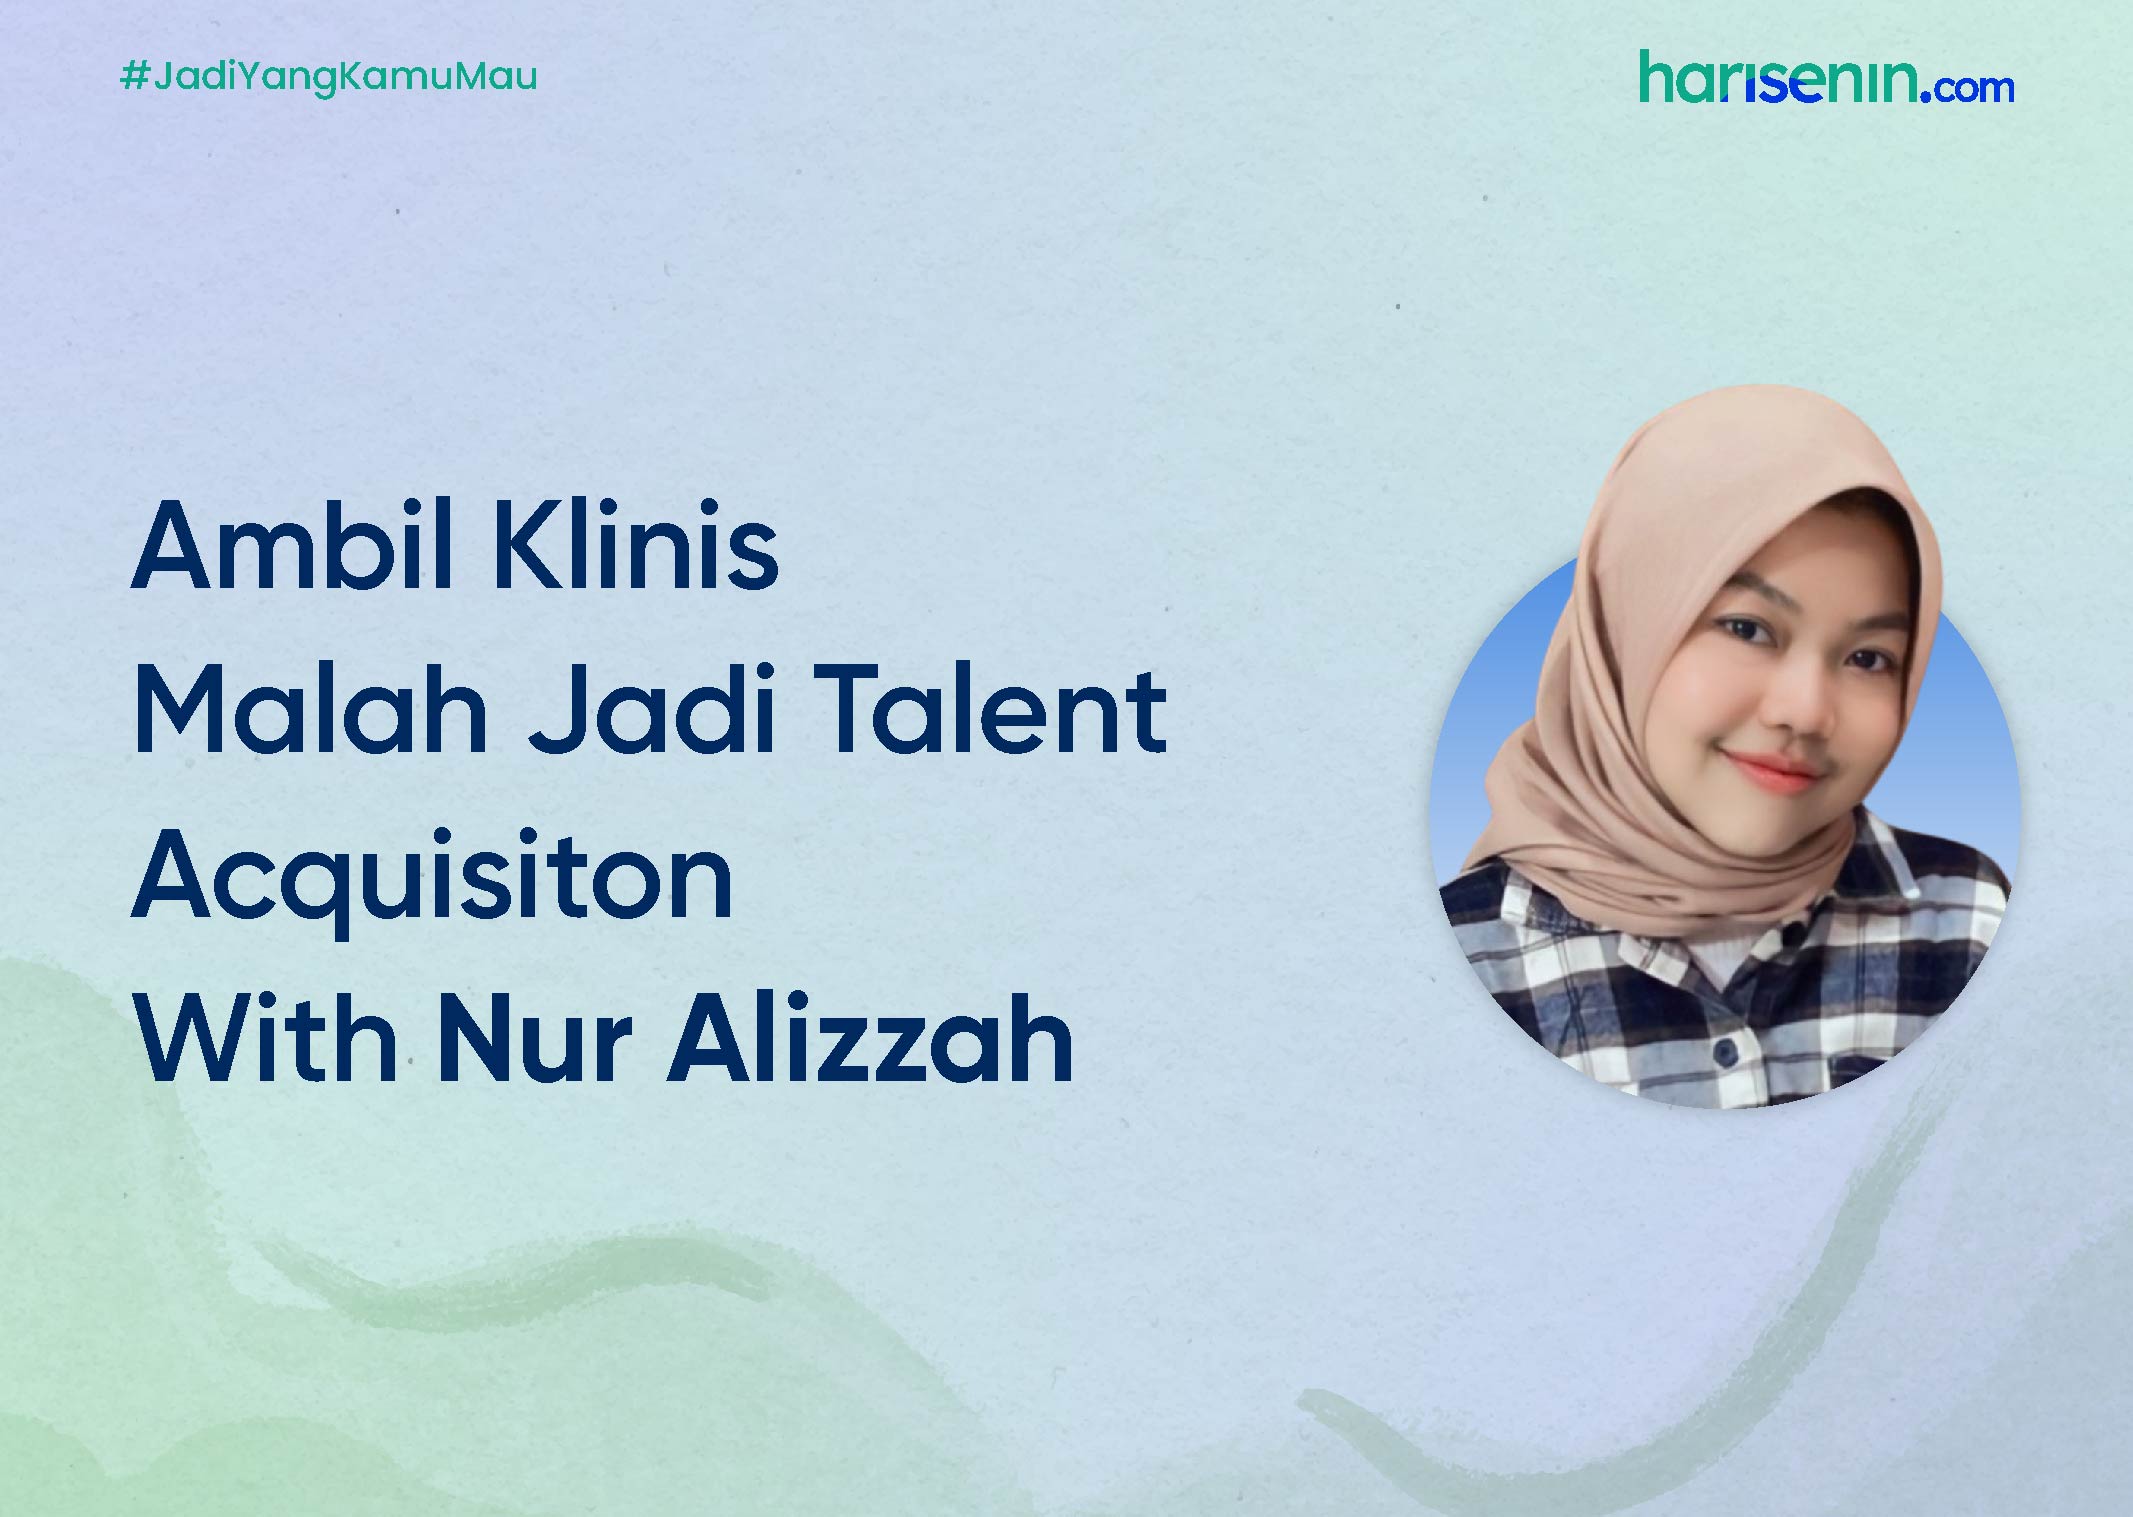 Ambil Klinis Malah Jadi Talent Acquisition With Nur Alizzah